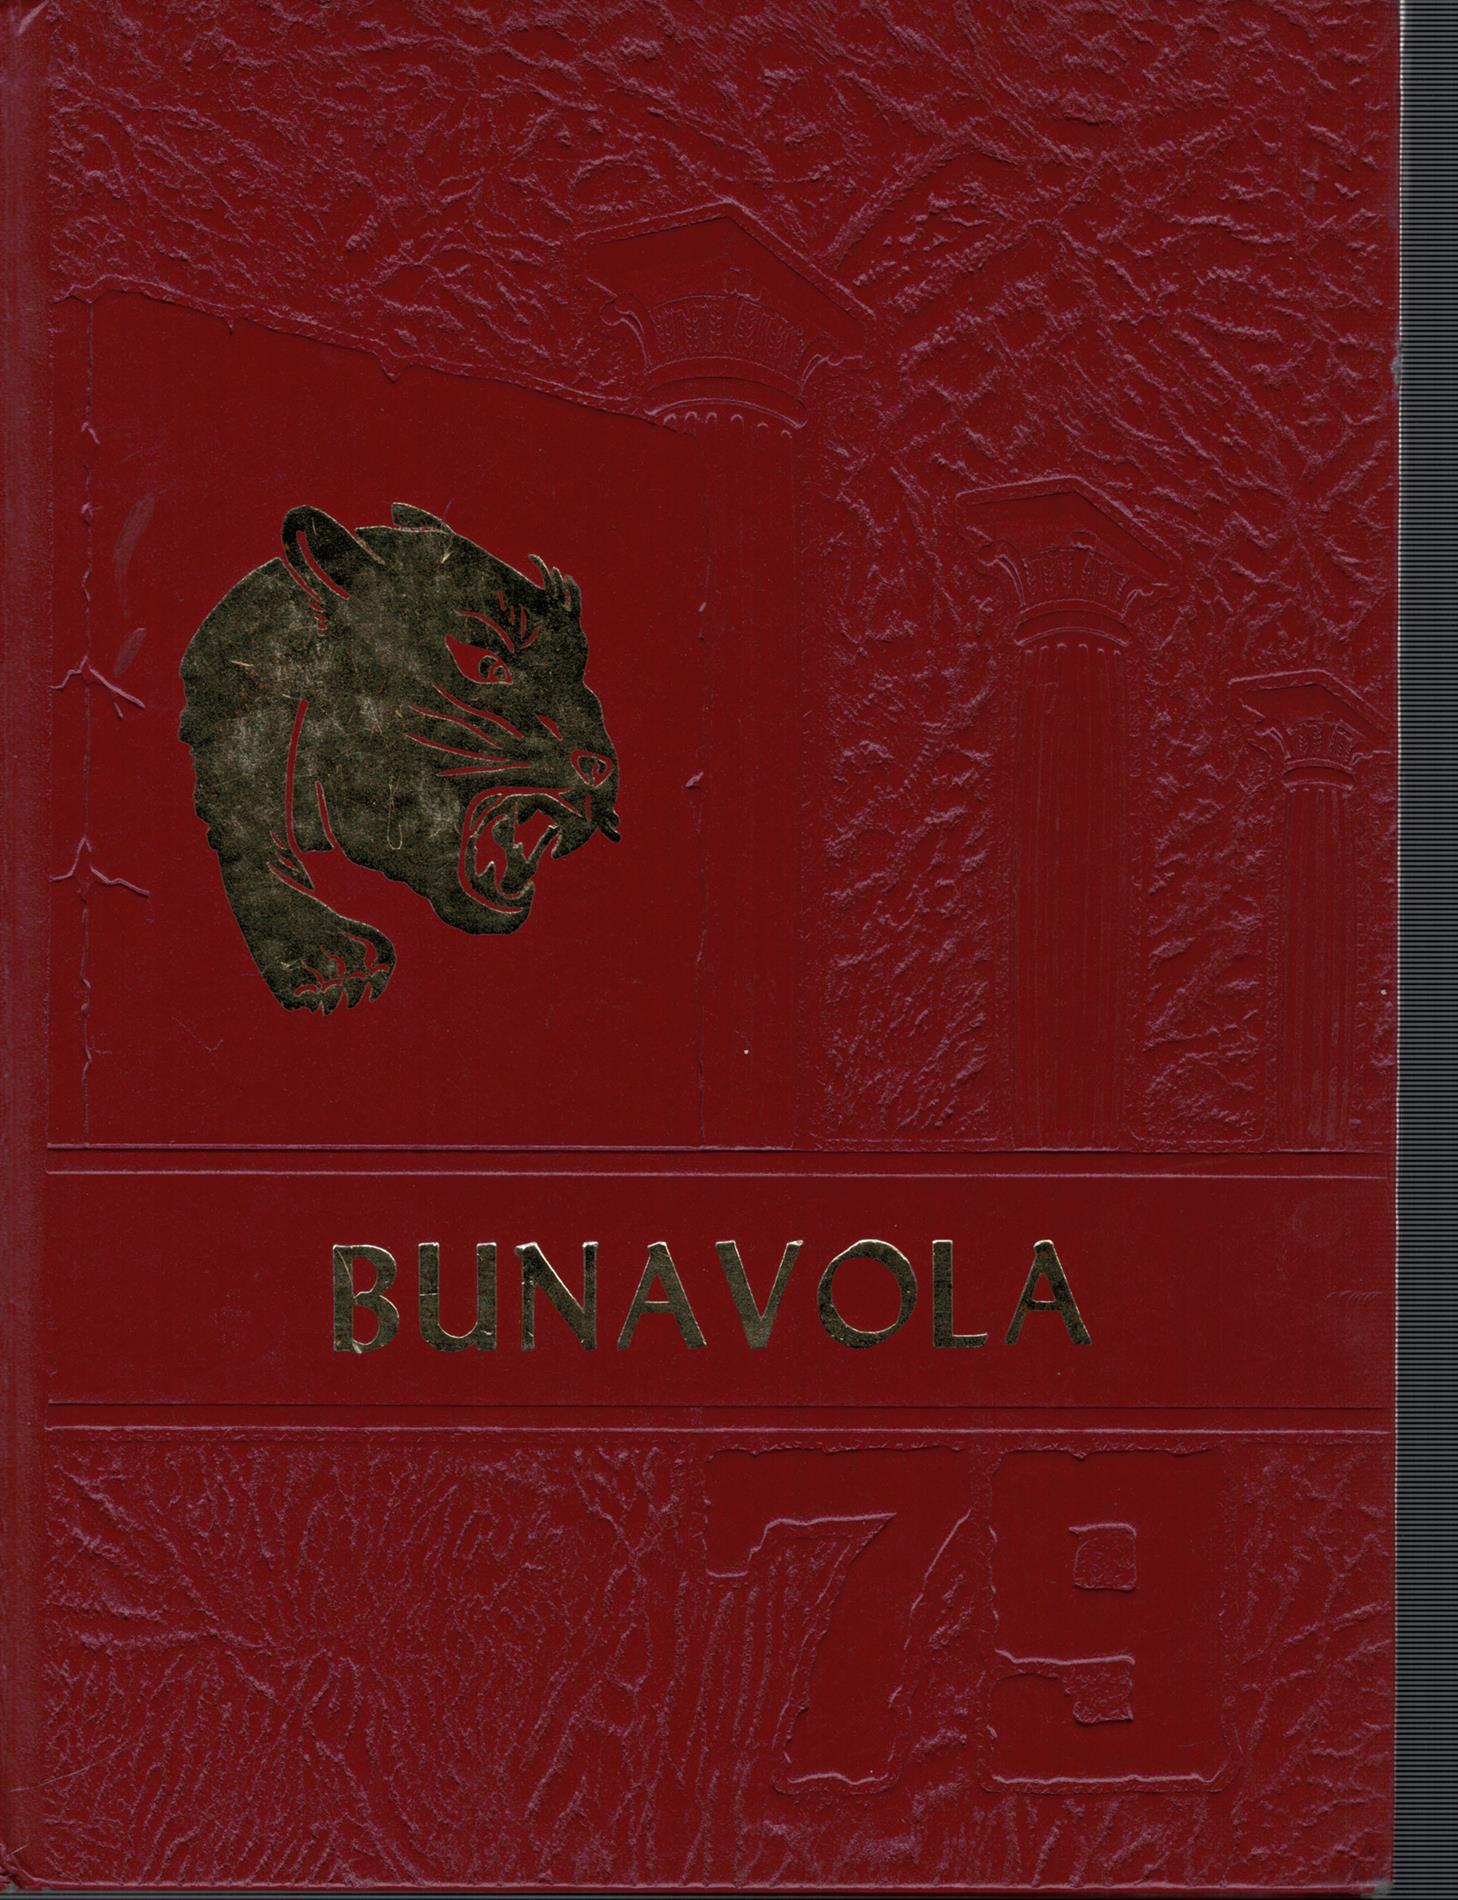 1979 Bunavola